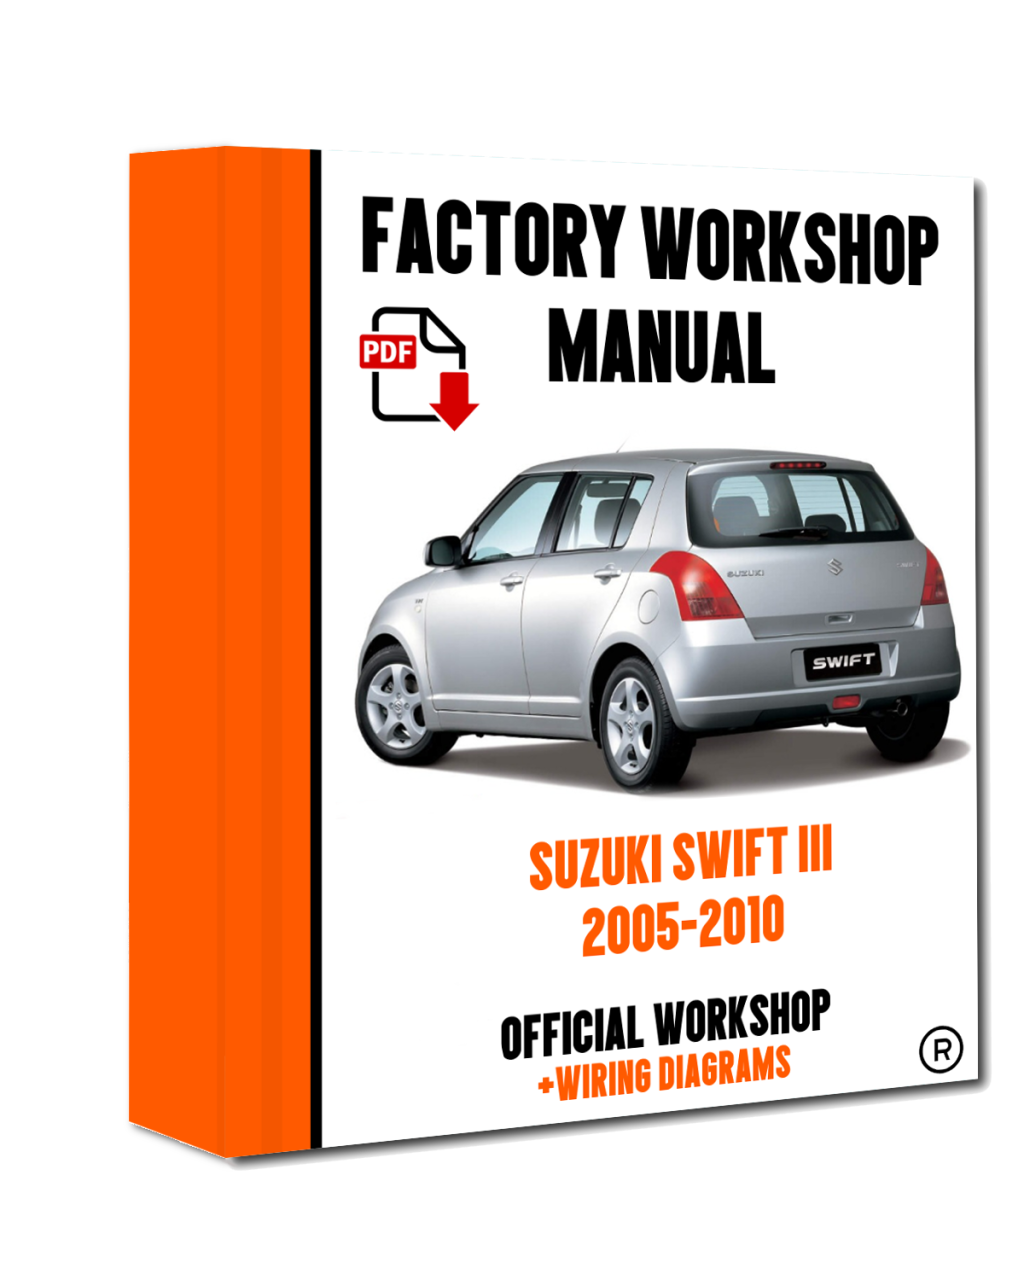 suzuki swift 2016 workshop manual - Official Workshop Manual Service Repair Suzuki Swift III